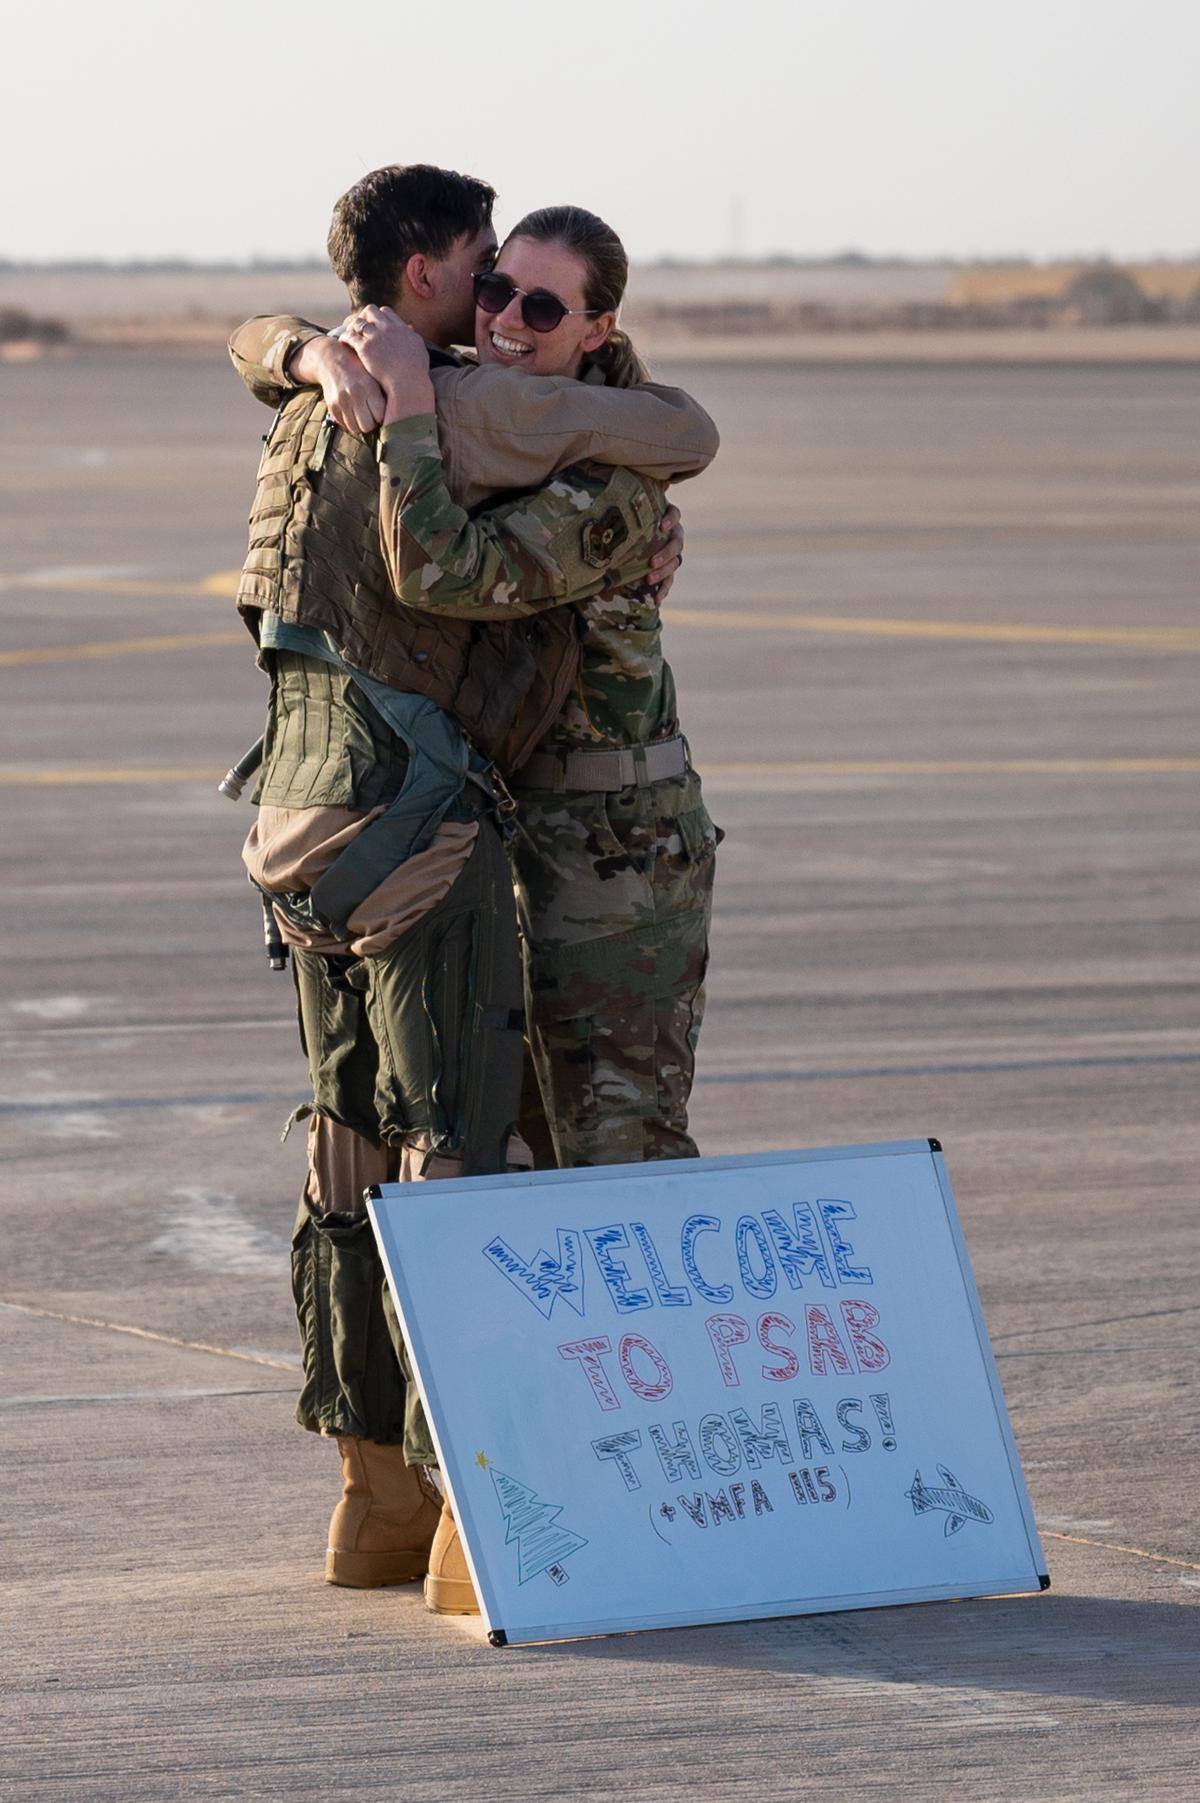 (Courtesy of <a href="https://www.dvidshub.net/image/7030991/reunited-desert-marine-airmen-couple-brought-together-deployment">Senior Airman Jacob B. Wrightsman/U.S. Air Force</a>)